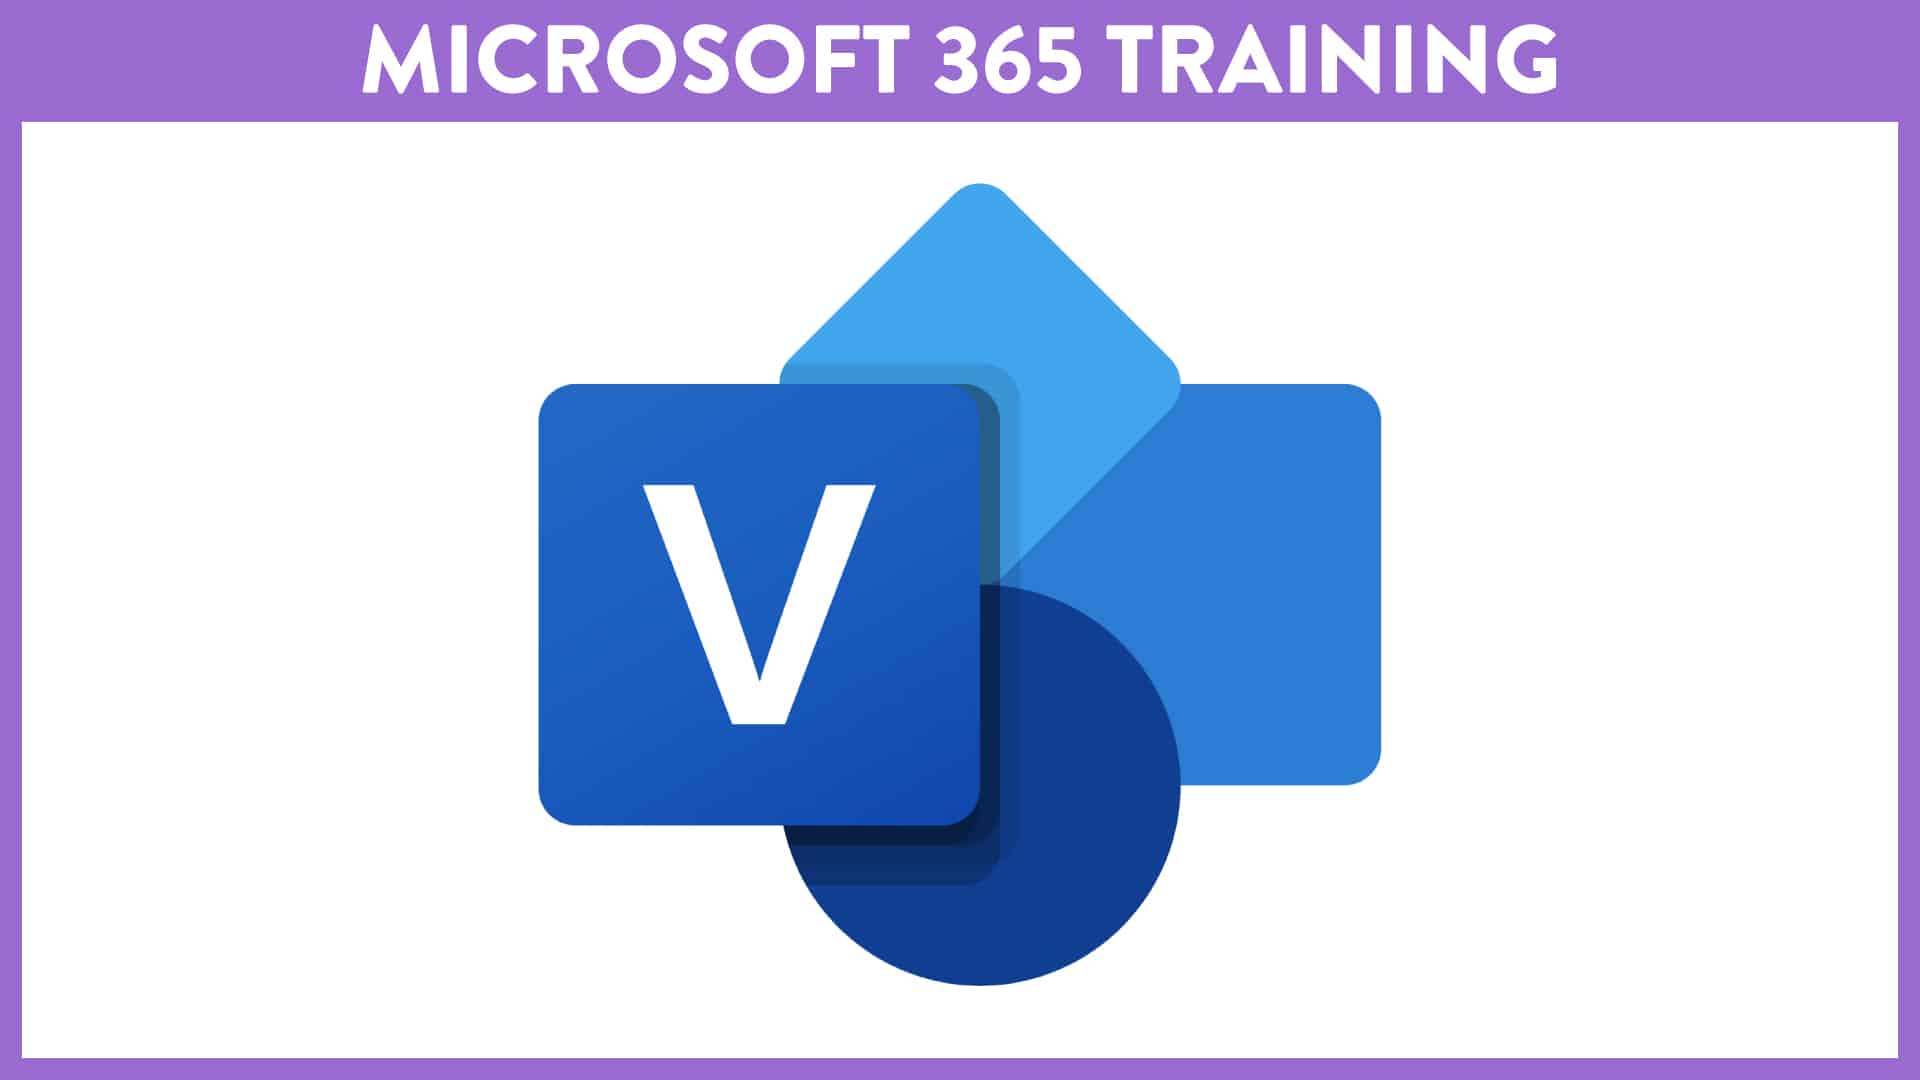 Microsoft Visio Training Event Cover Image